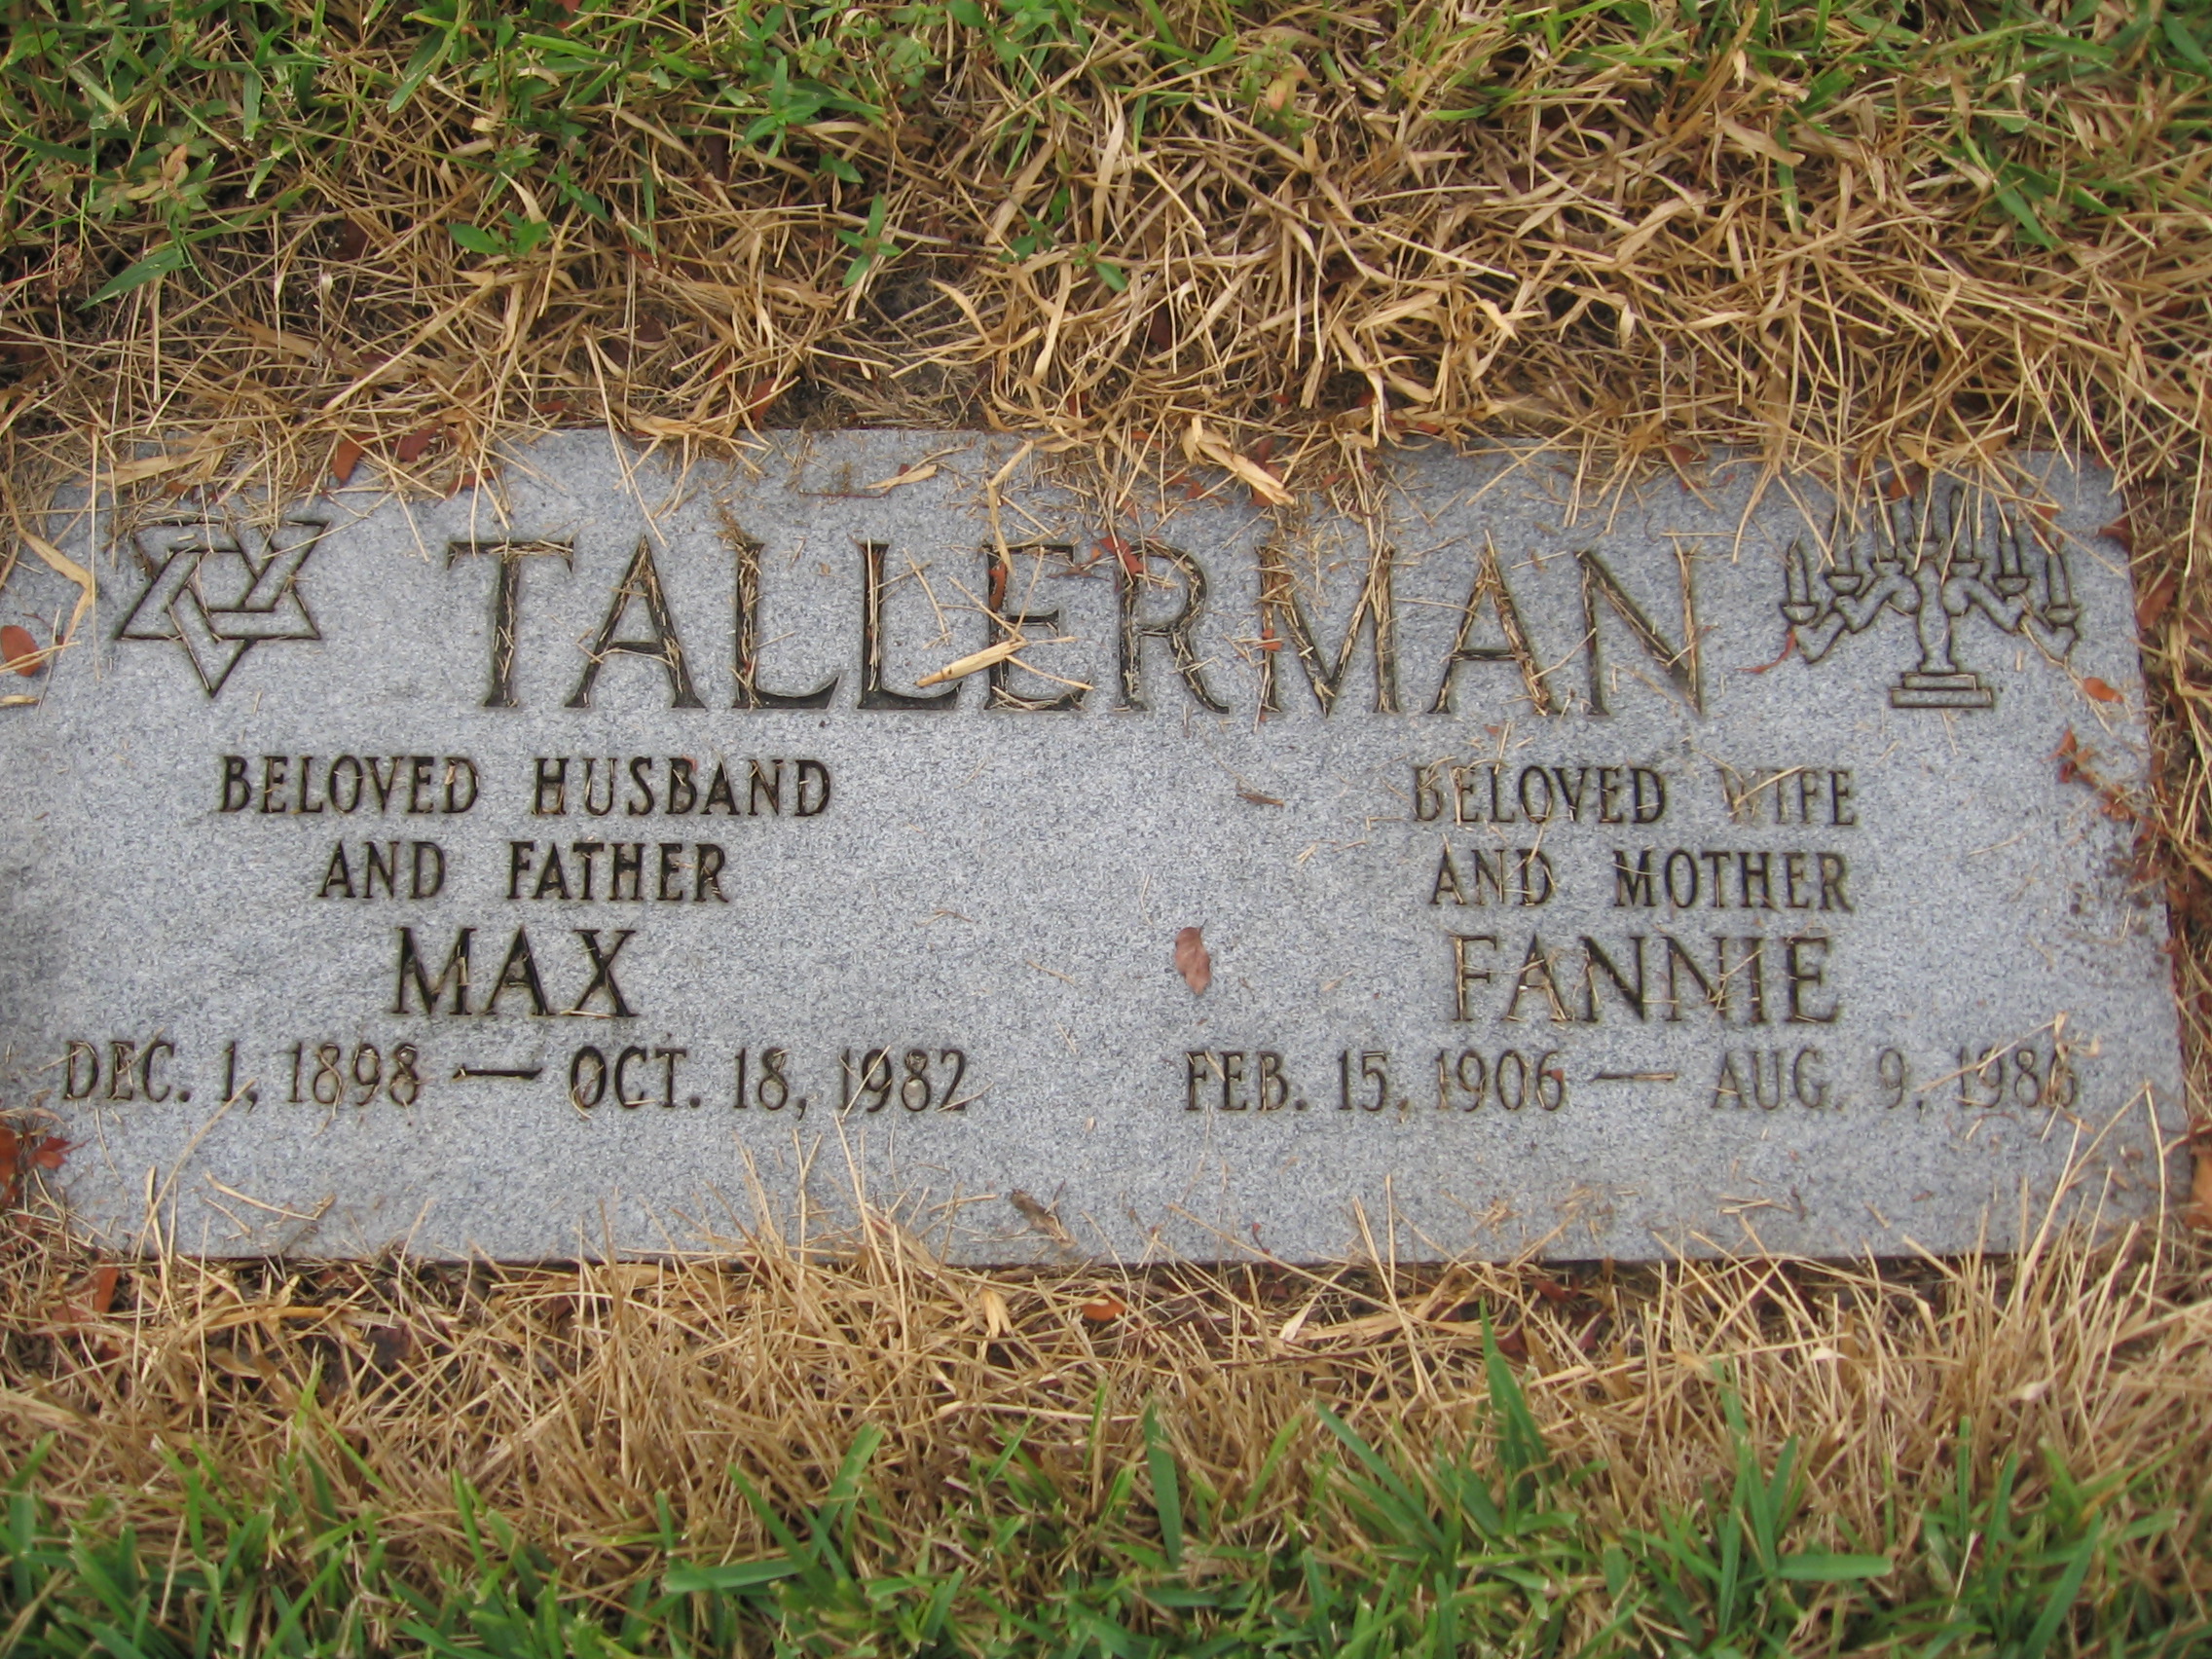 Fannie Tallerman